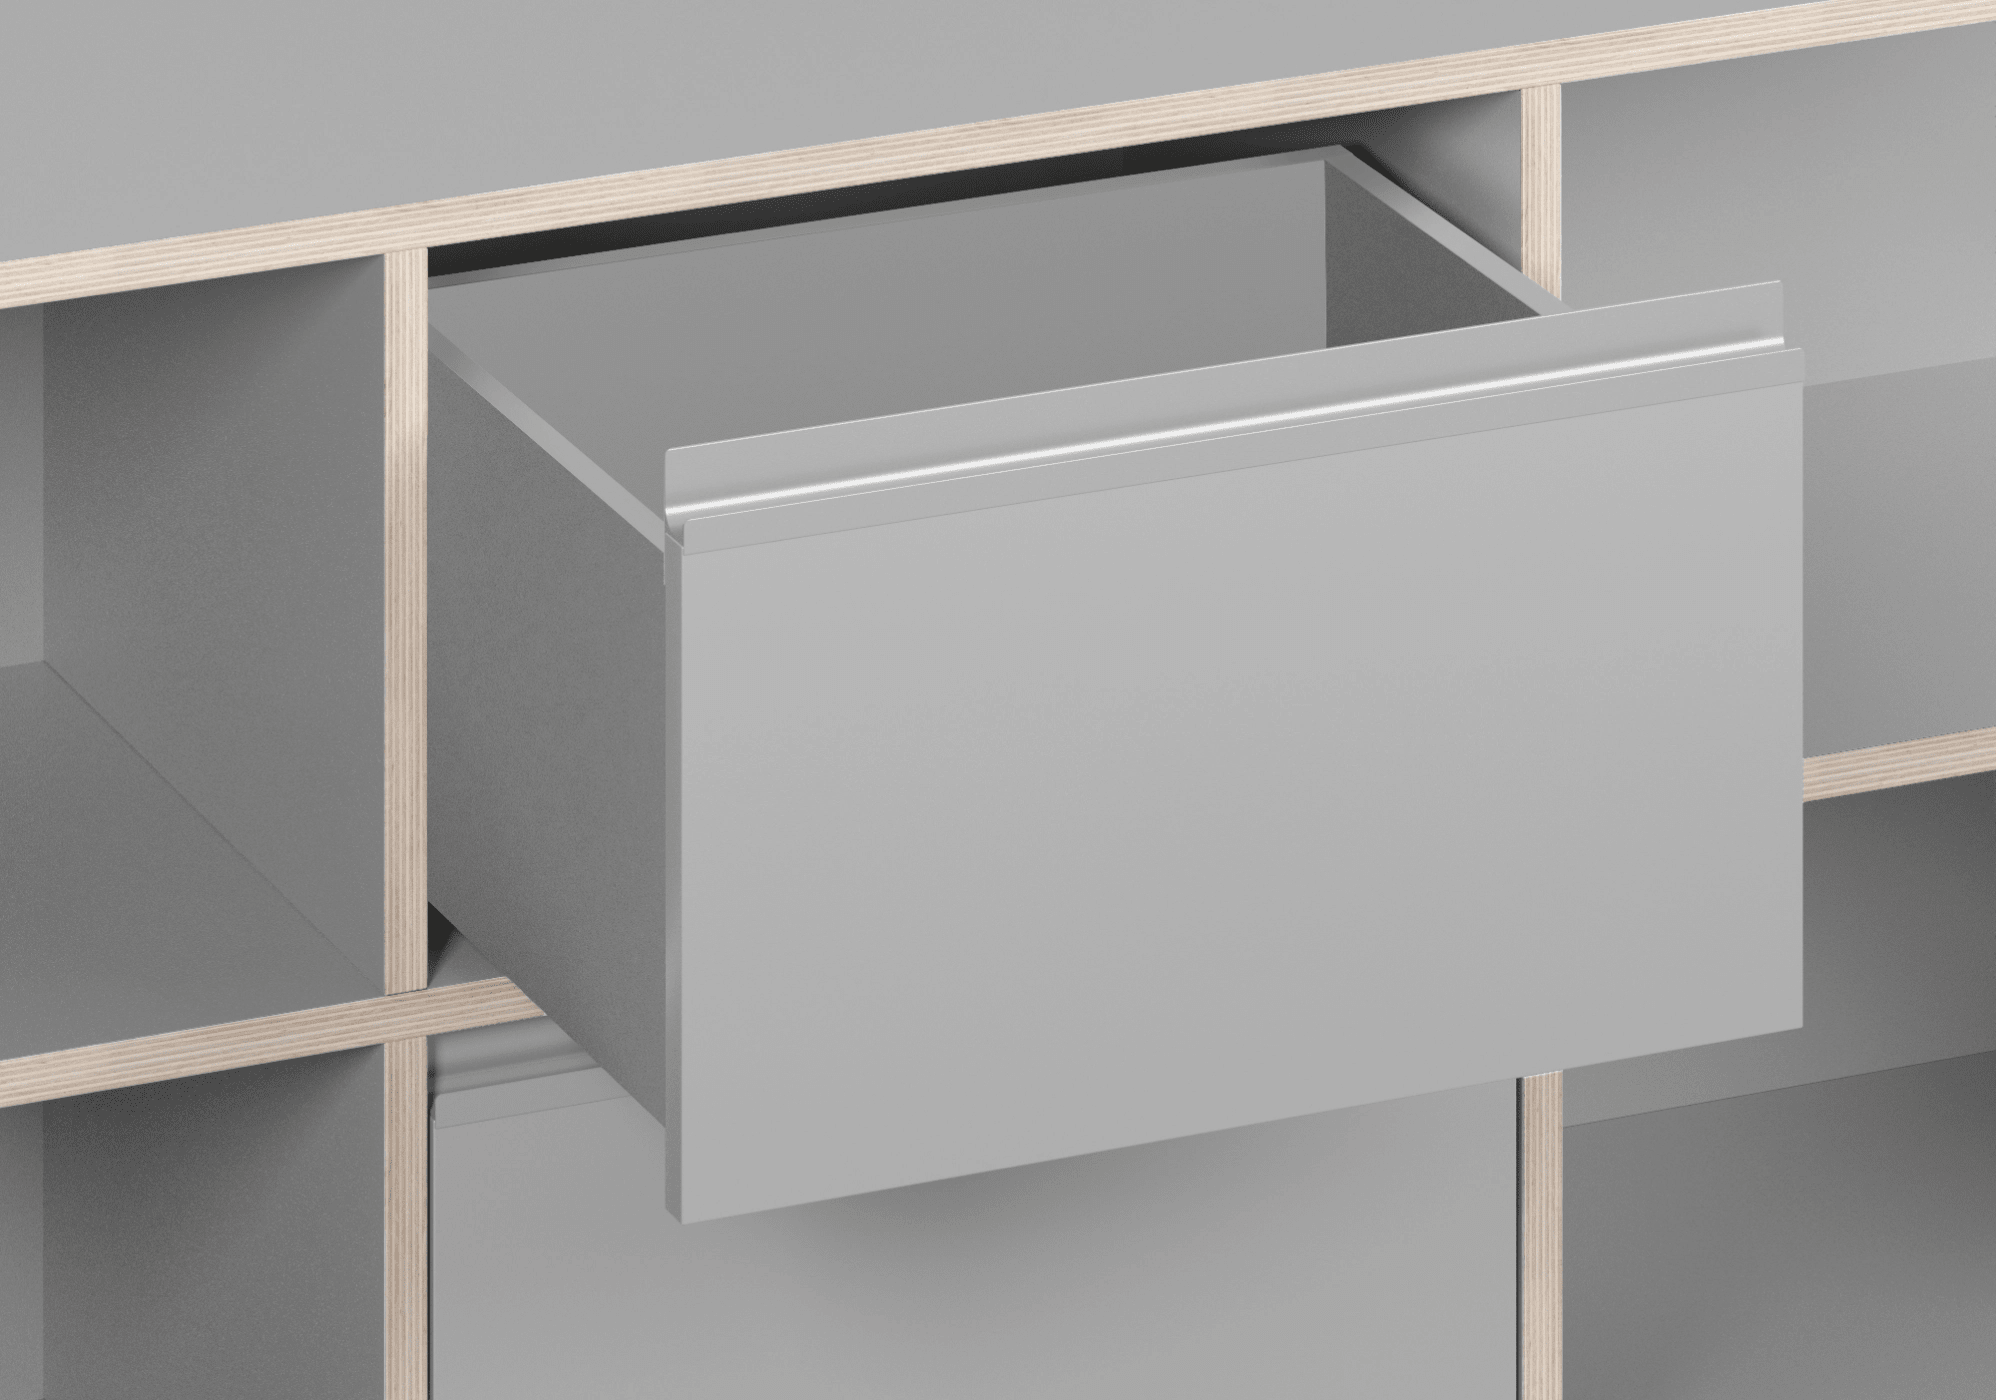 Tiefes Graue Multiplex-Platte Sideboard mit Türen, Schubladen, Ruckwanden und Sockel multiplexplatten - 191x73x40cm 8